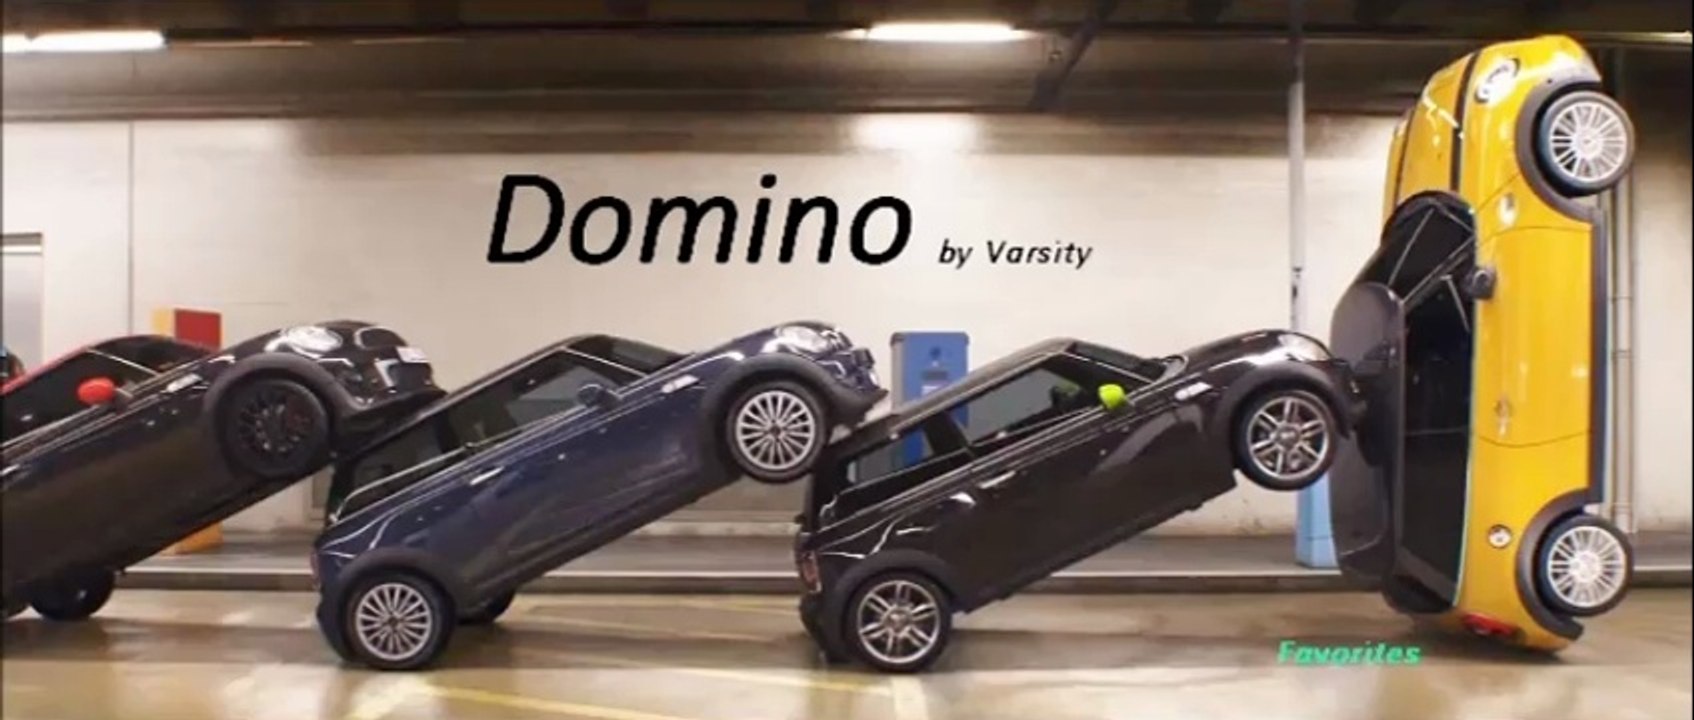 Domino by Varsity (Favorites)